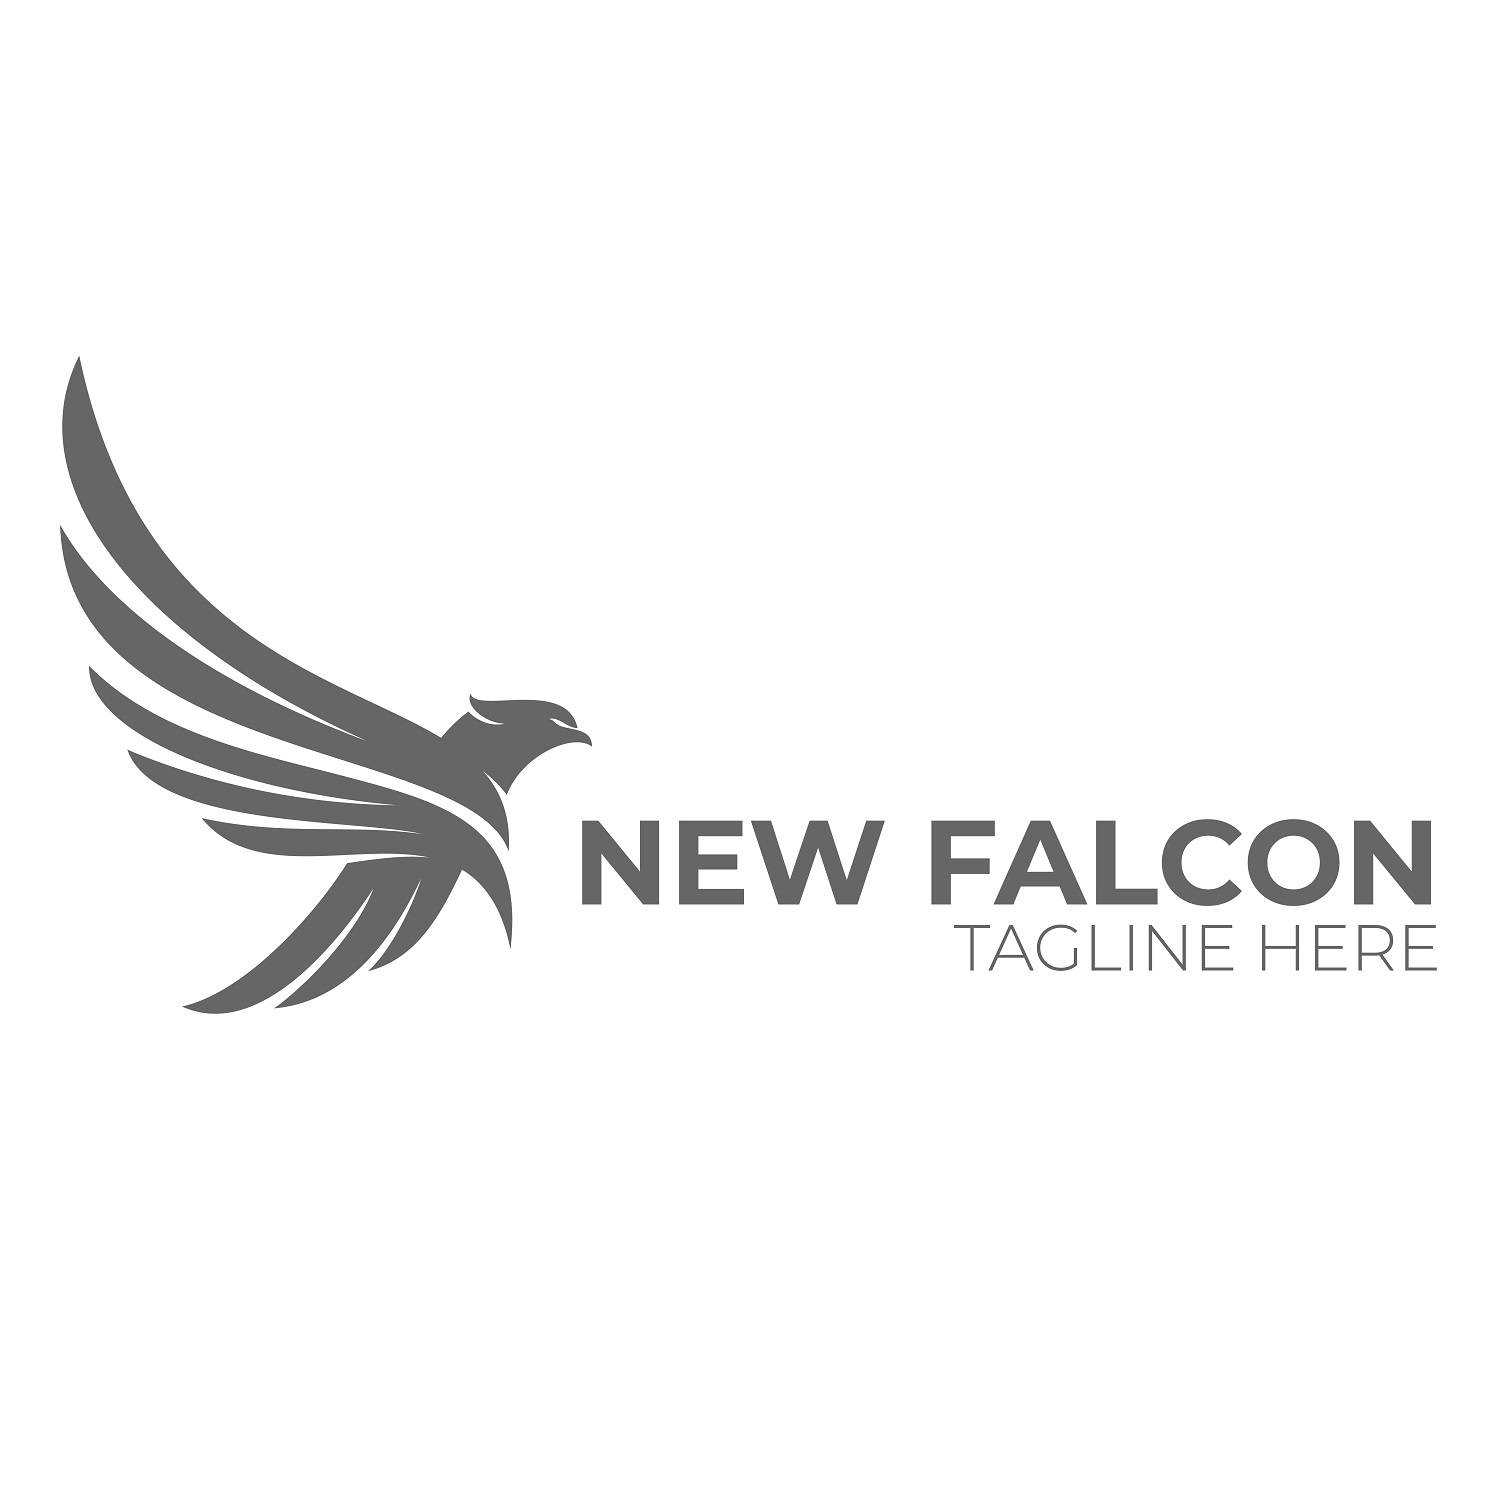 New modern falcon logo design template